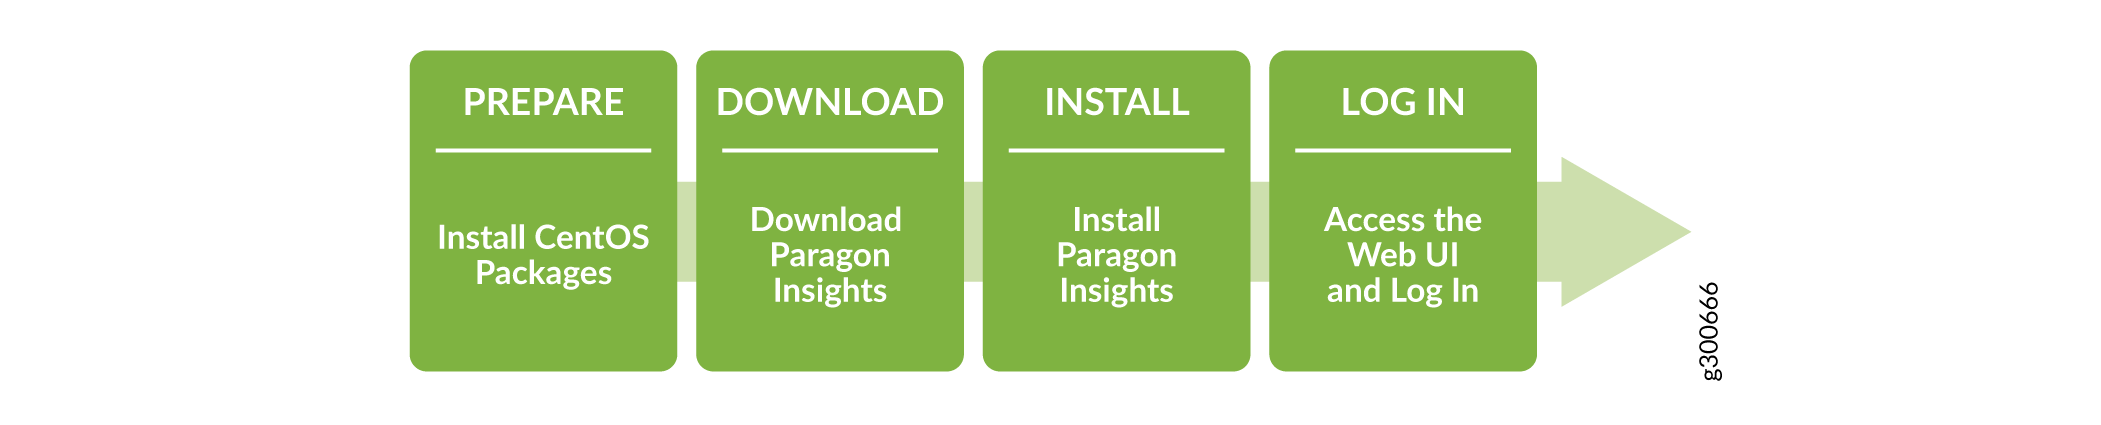 Installation Workflow
- Paragon Insights on CentOS